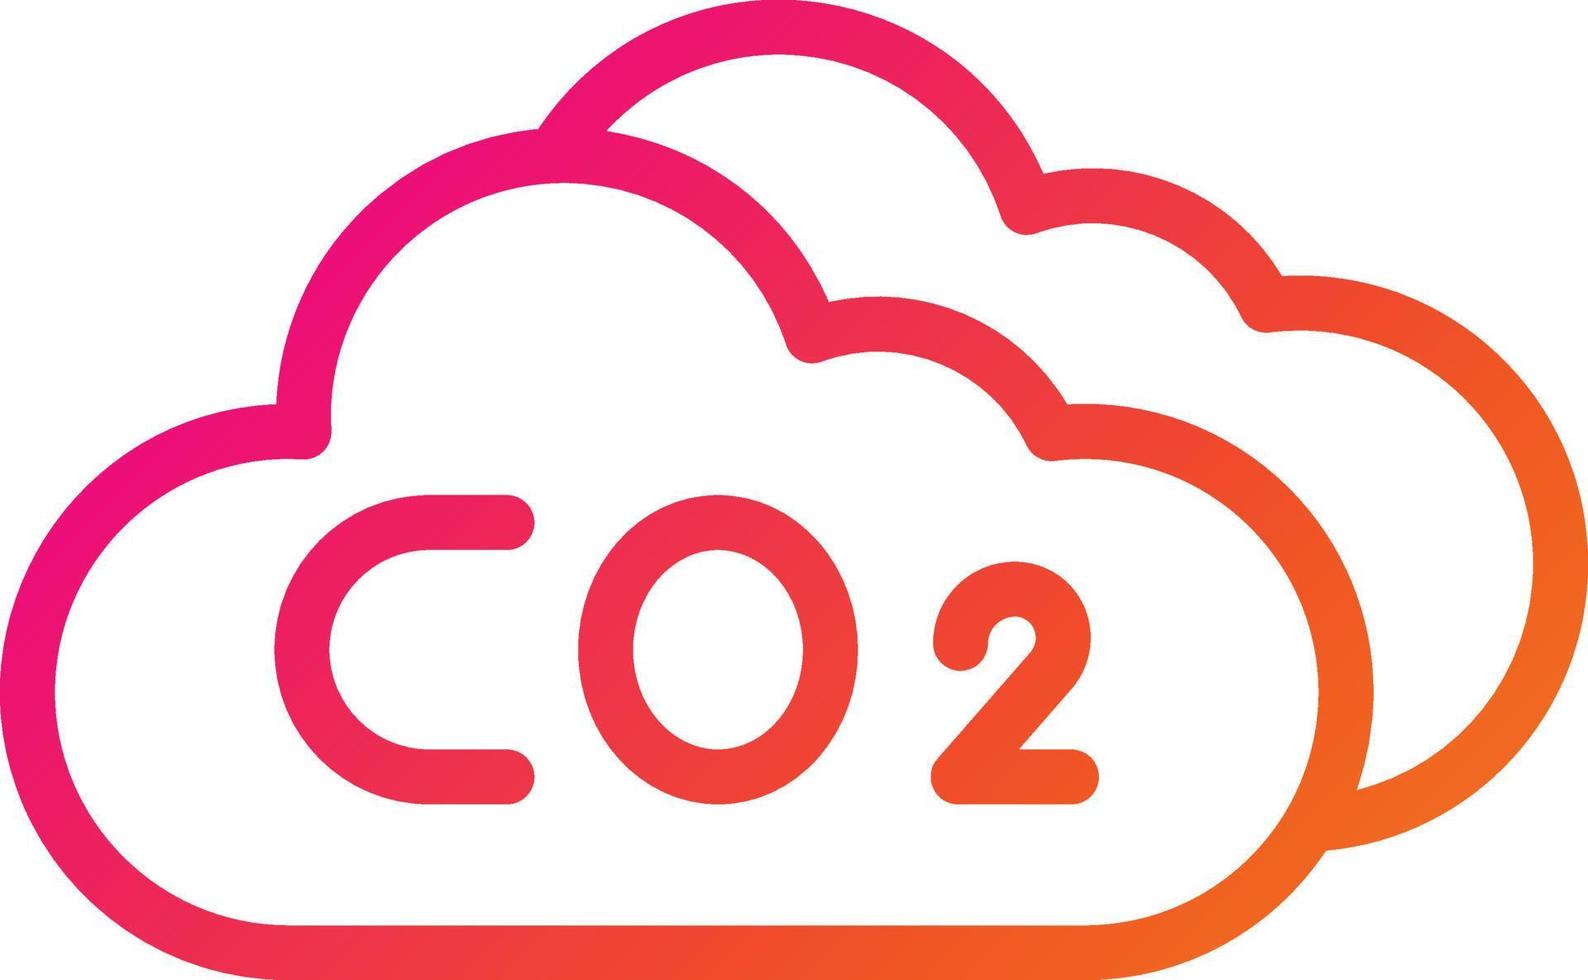 Co2-Cloud-Vektor-Icon-Design-Illustration vektor